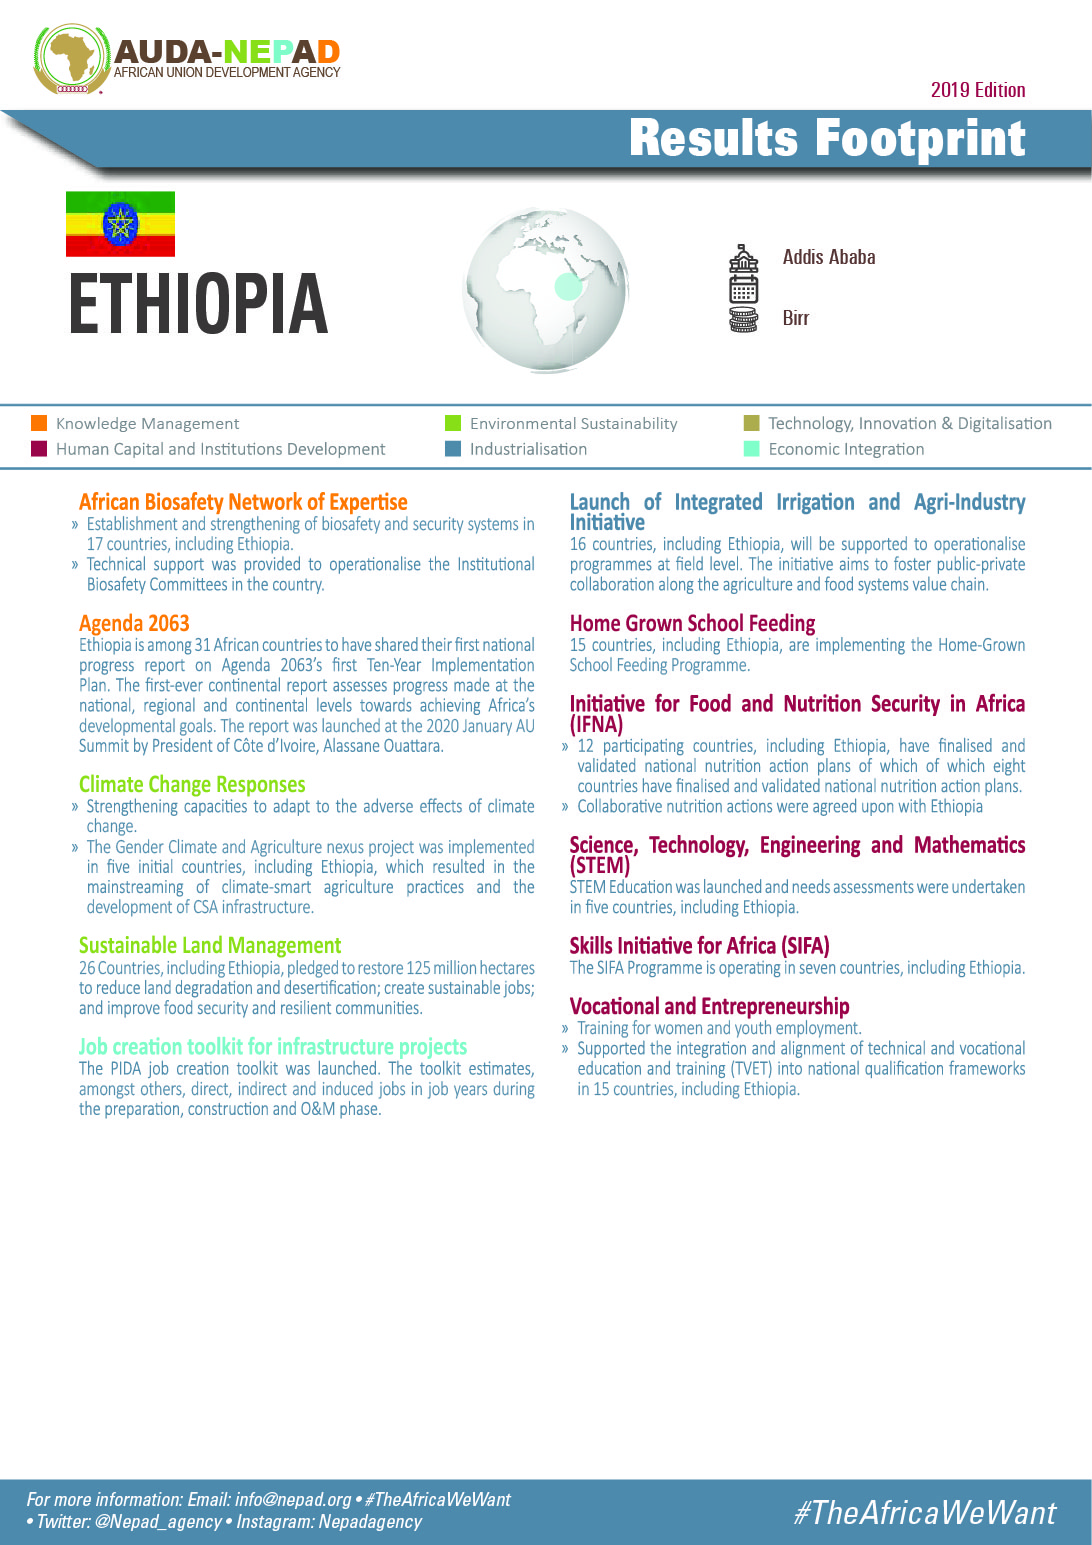 2019 AUDA-NEPAD Footprint: Country Profiles: Ethiopia